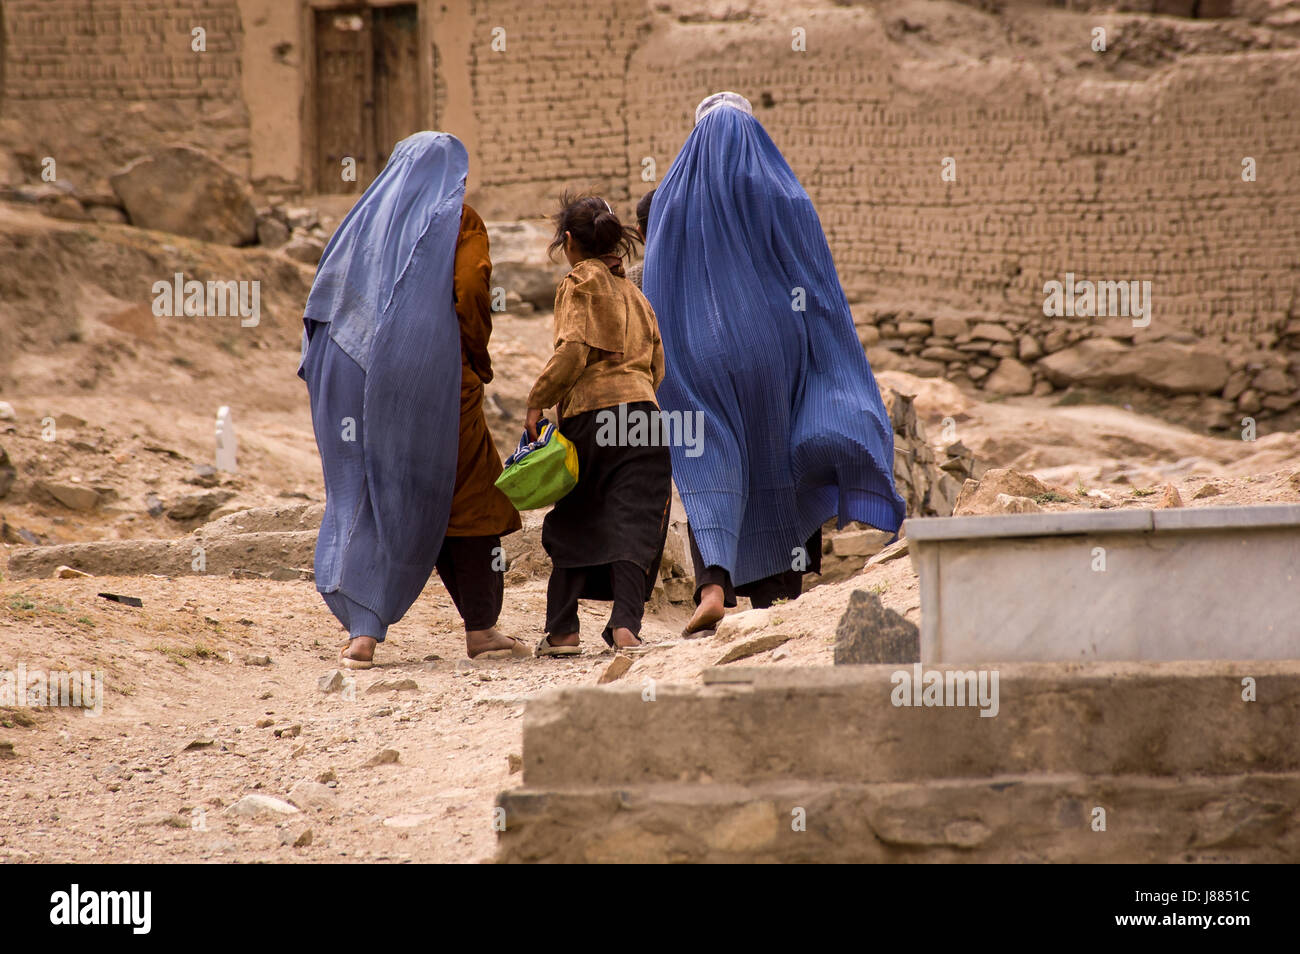 Girls and women in burqas walk through a graveyard near Kabul, Afghanistan Stock Photo